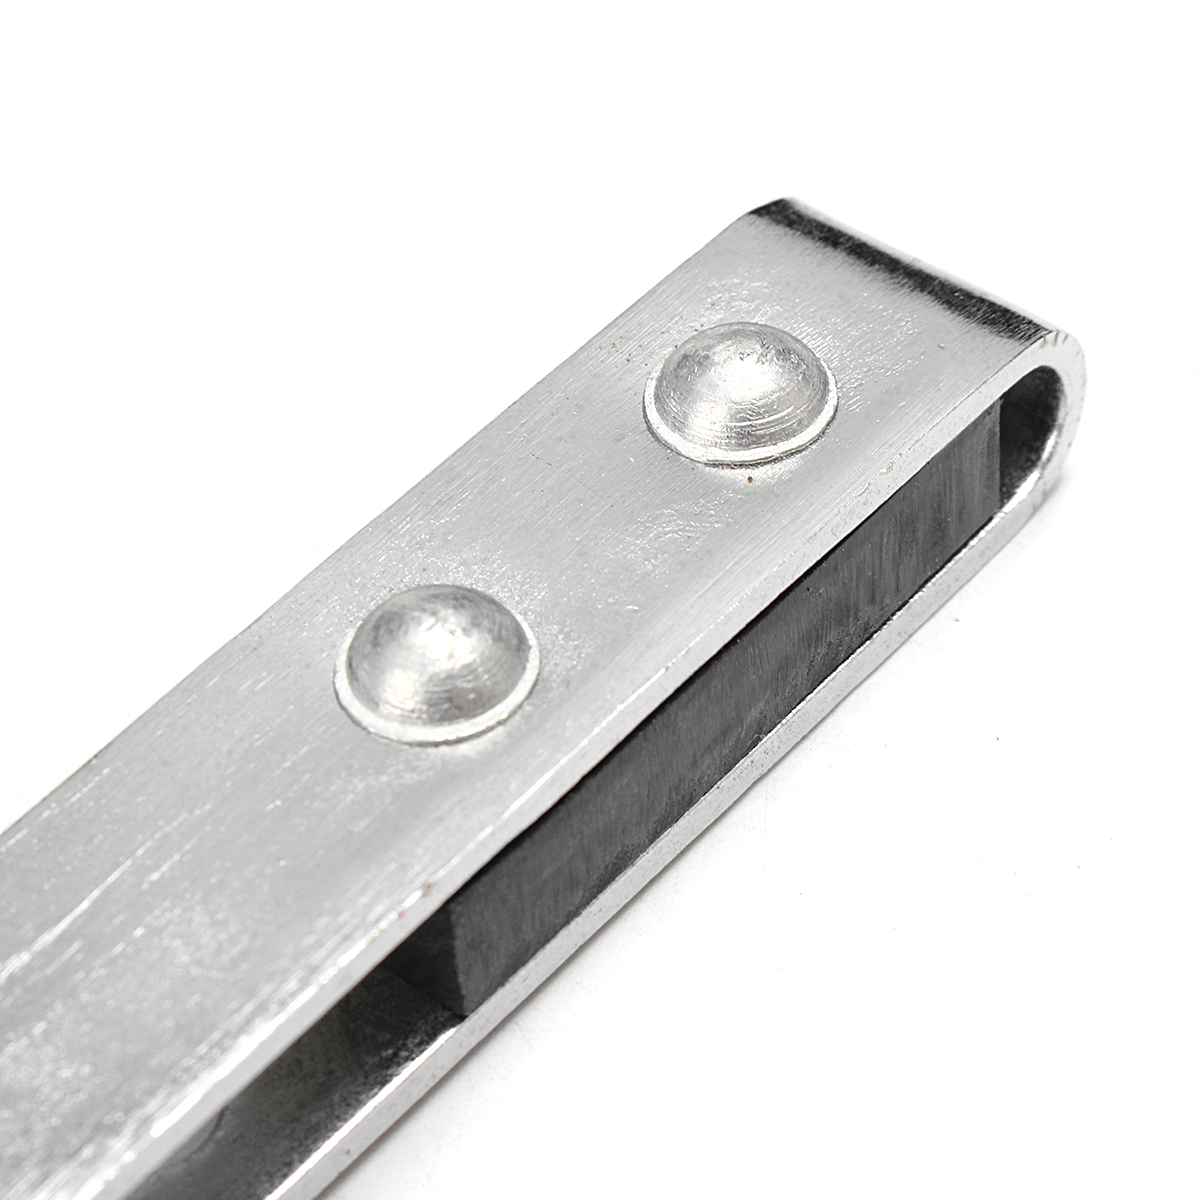 Steel-U-Bar-Floor-Layer-Scriber-with-Locking-Nut-for-PVC-Rubber-Flooring-1109879-4